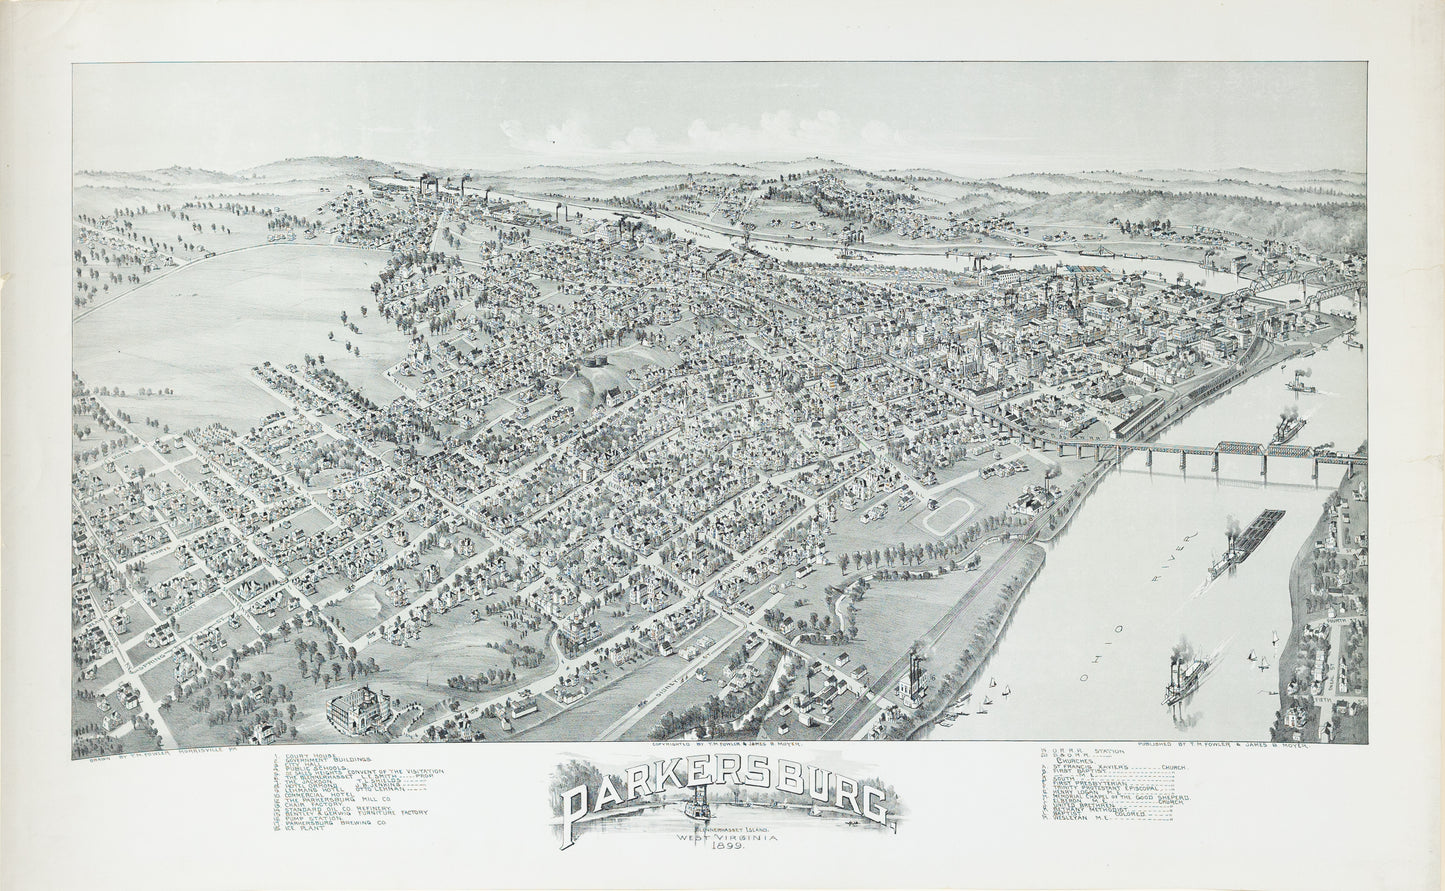 Fowler, T.M. Parkersburg, Blennerhasset Island, West Virginia 1899. Morrisville, PA: 1899.